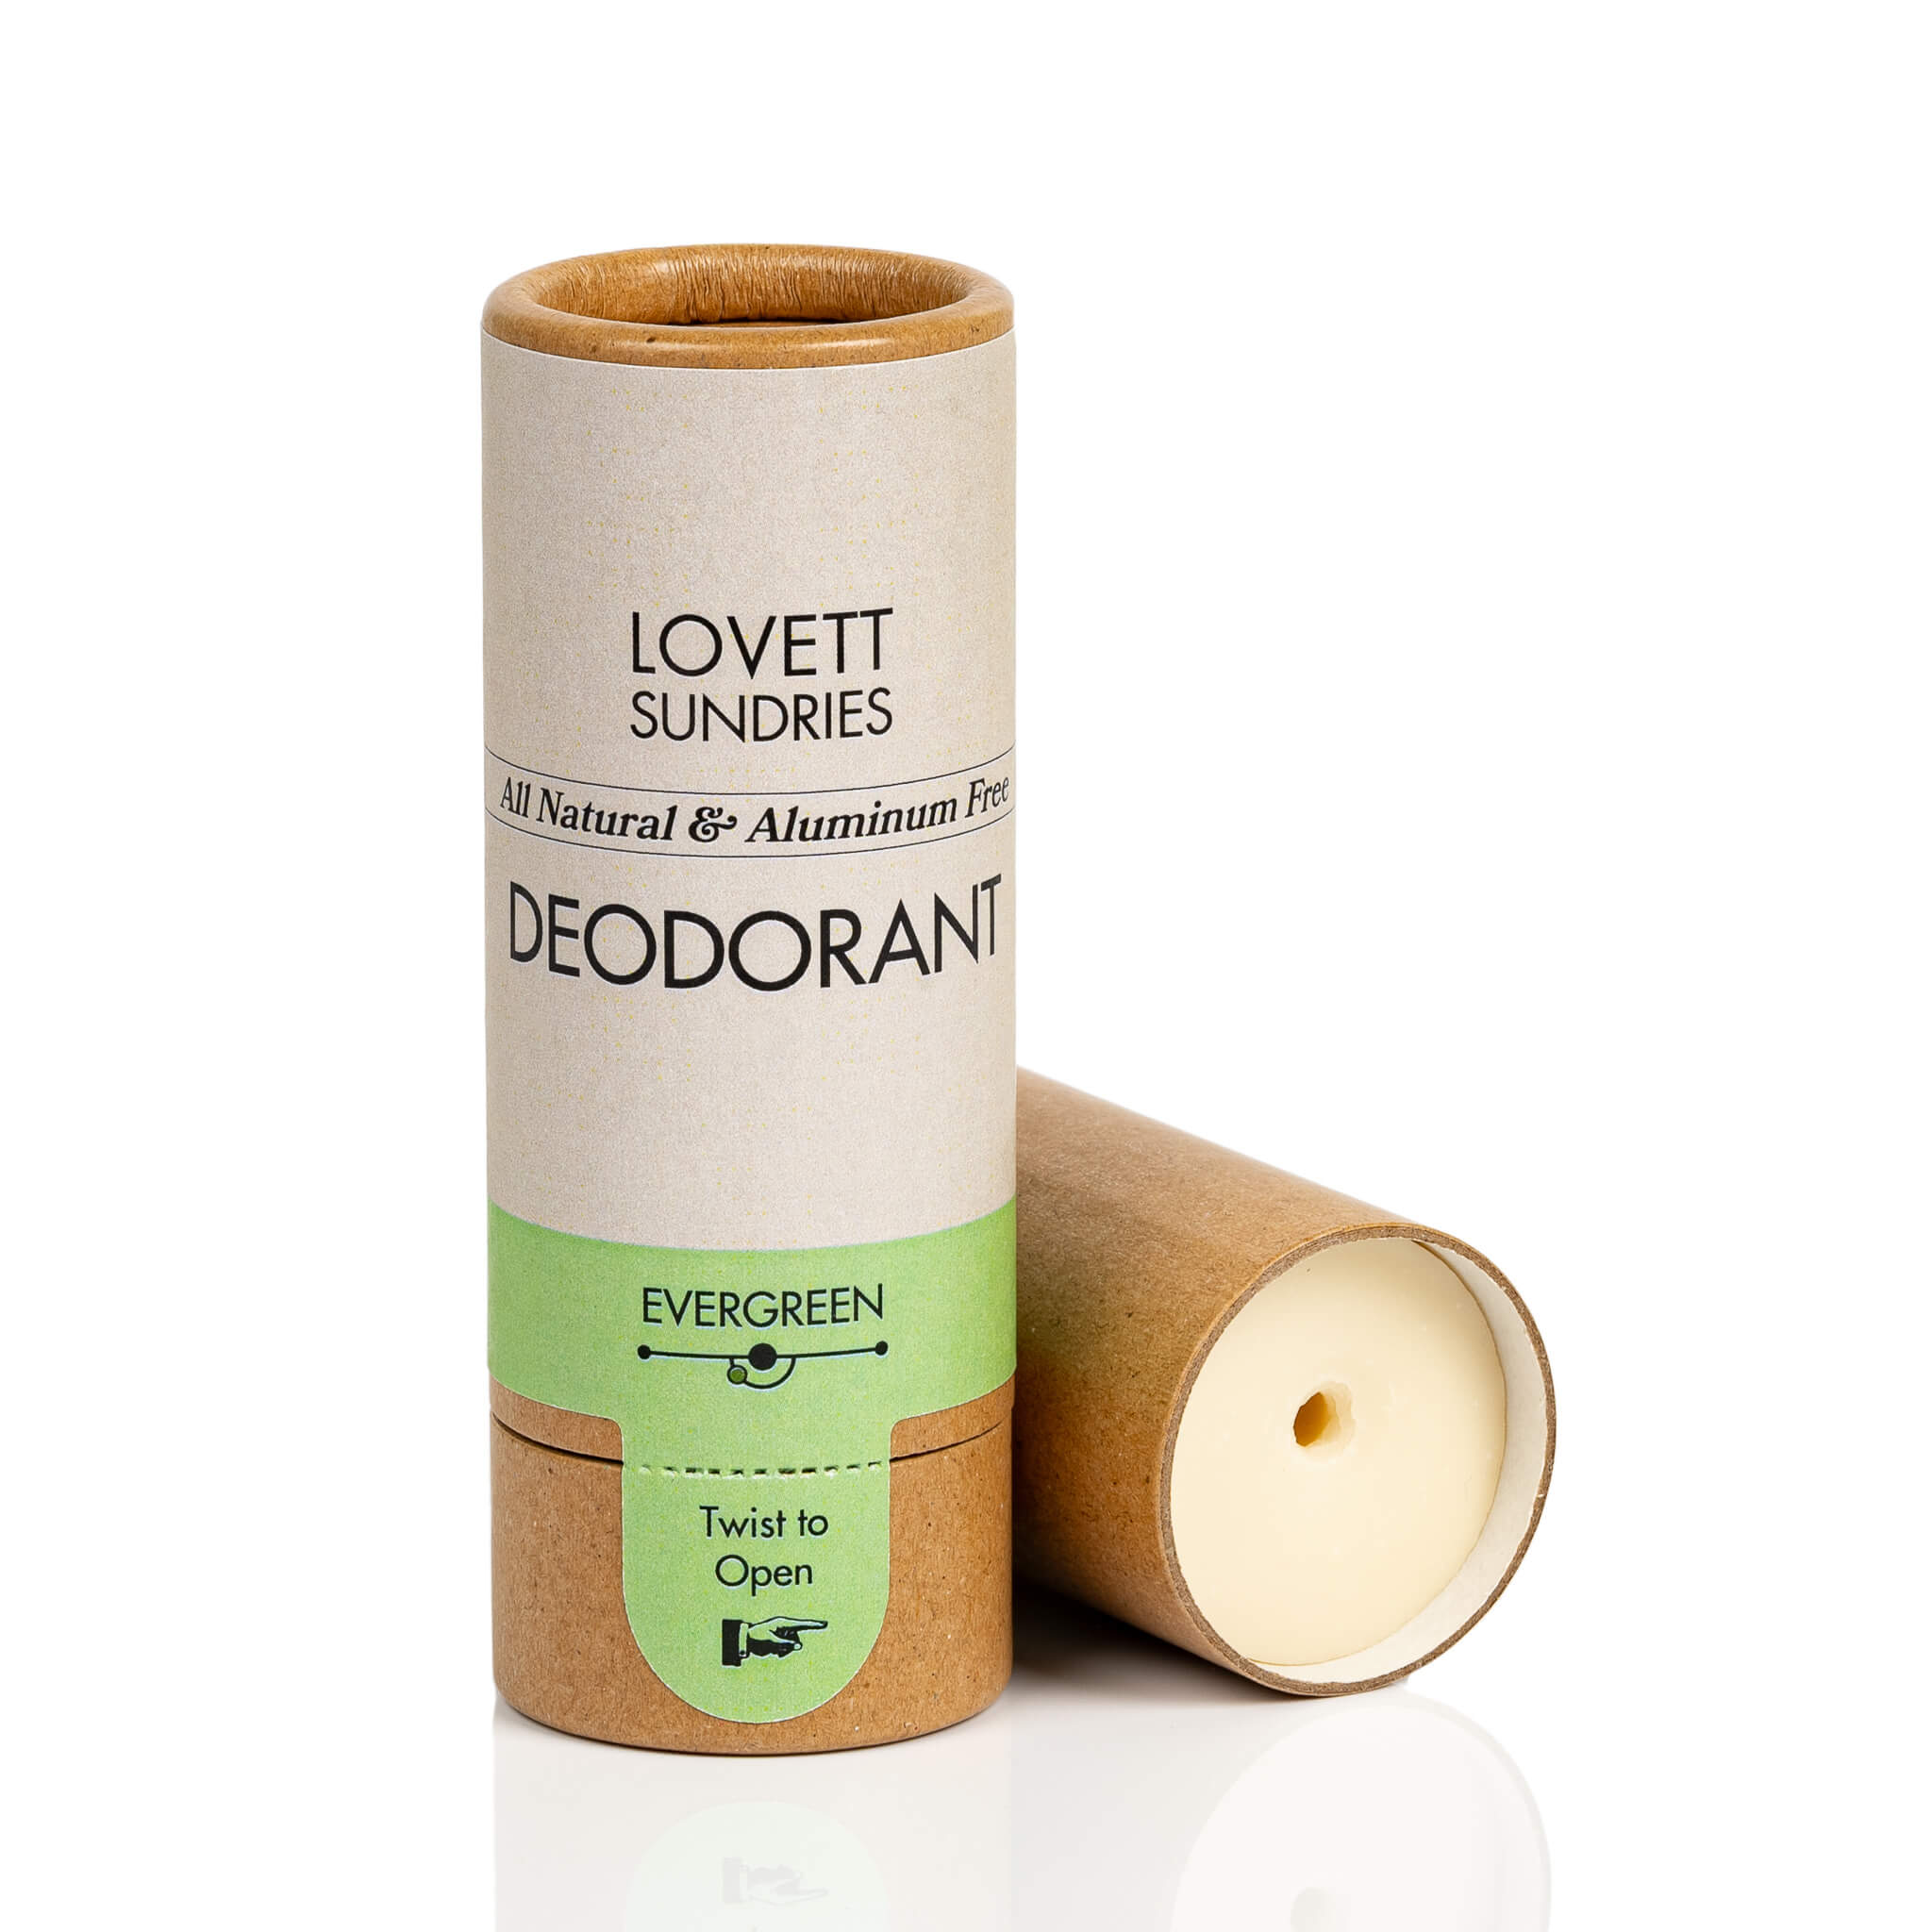 All Natural aluminum free evergreen scented deodorant stick